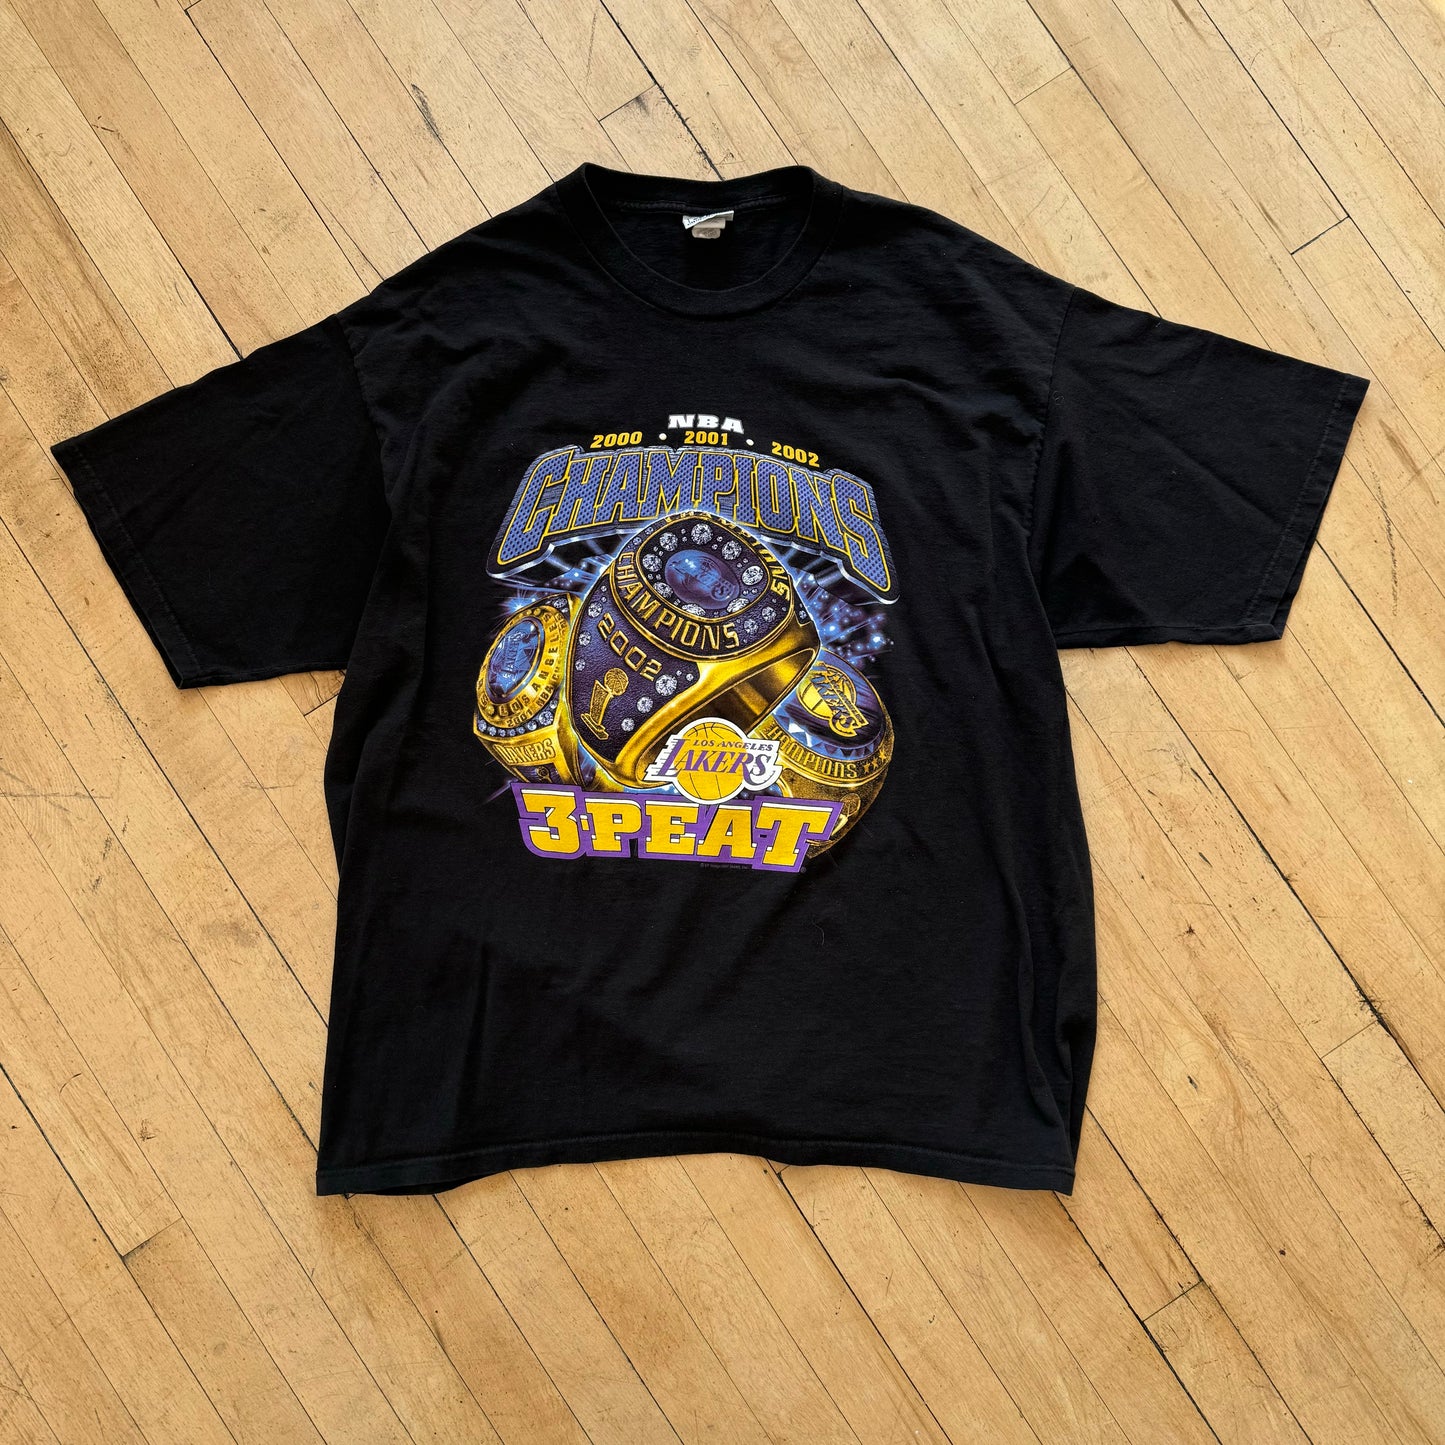 Vintage Lee Sports Lakers 3-Peat T-shirt Sz XXL